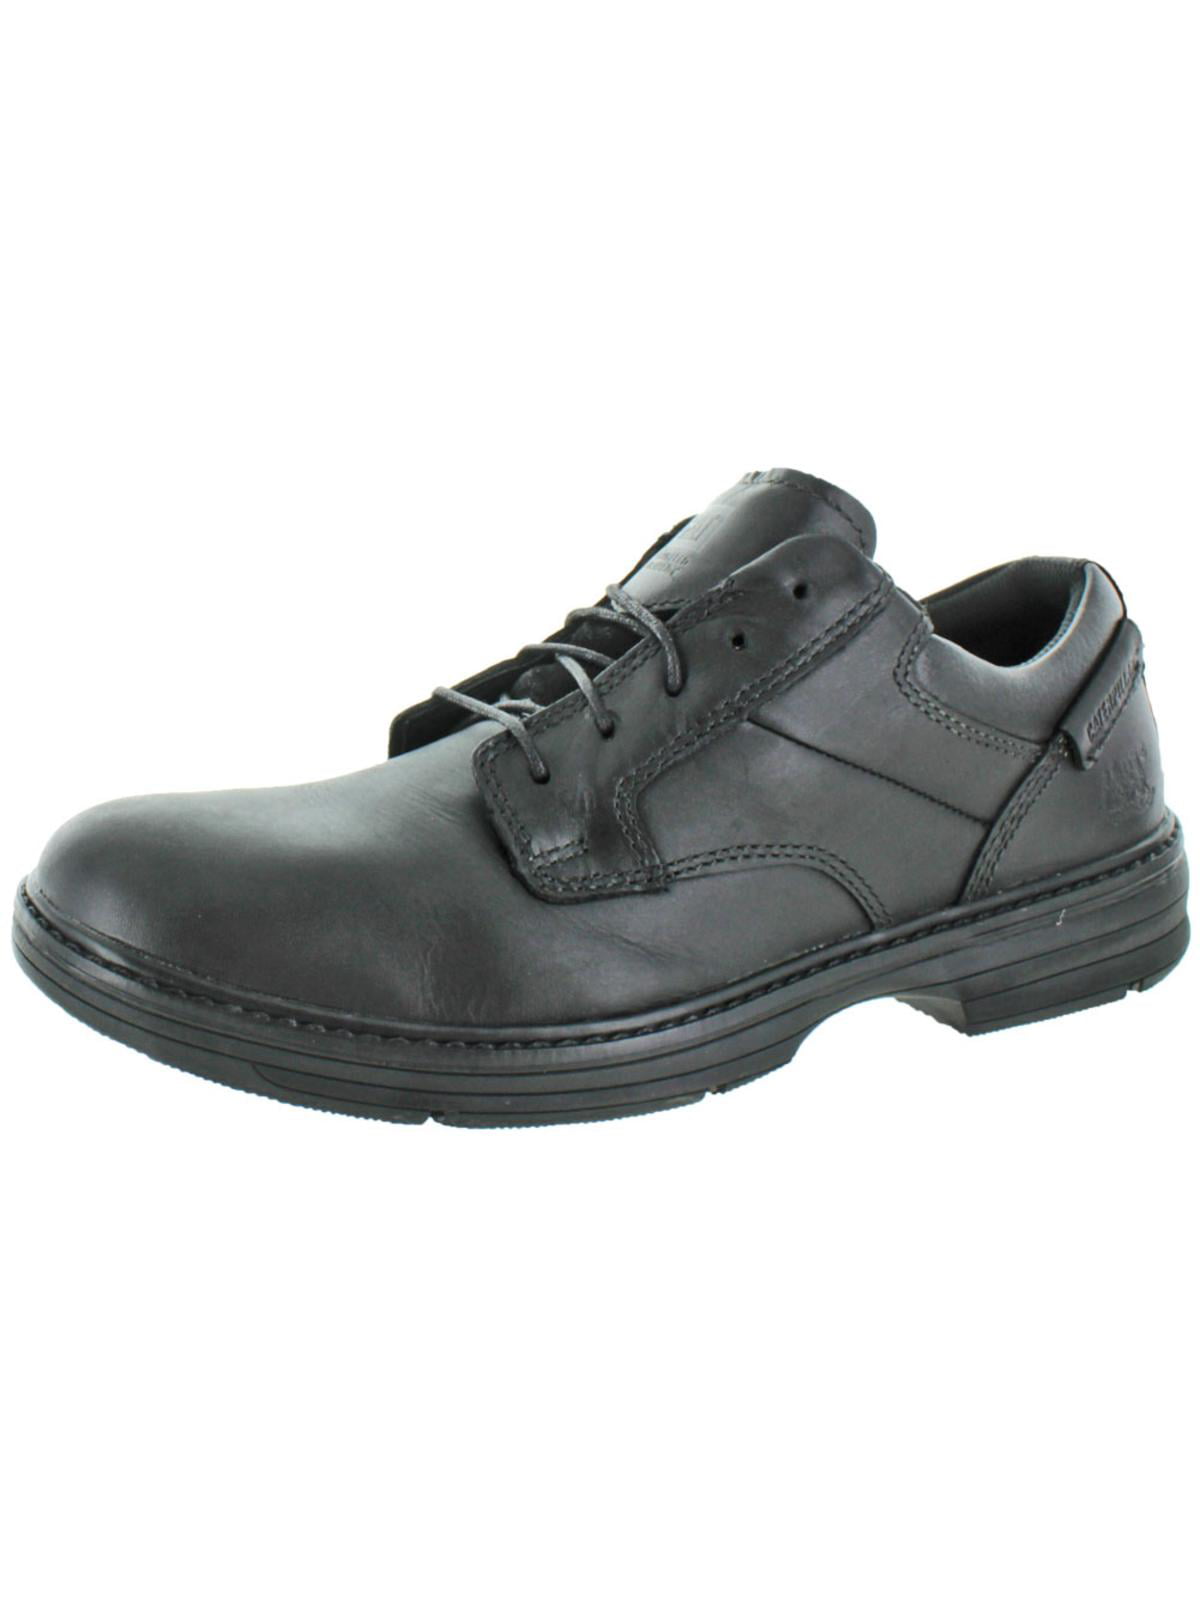 Men's Caterpillar Inherit Leather Lace Up Steel Toe Cap Shoes 